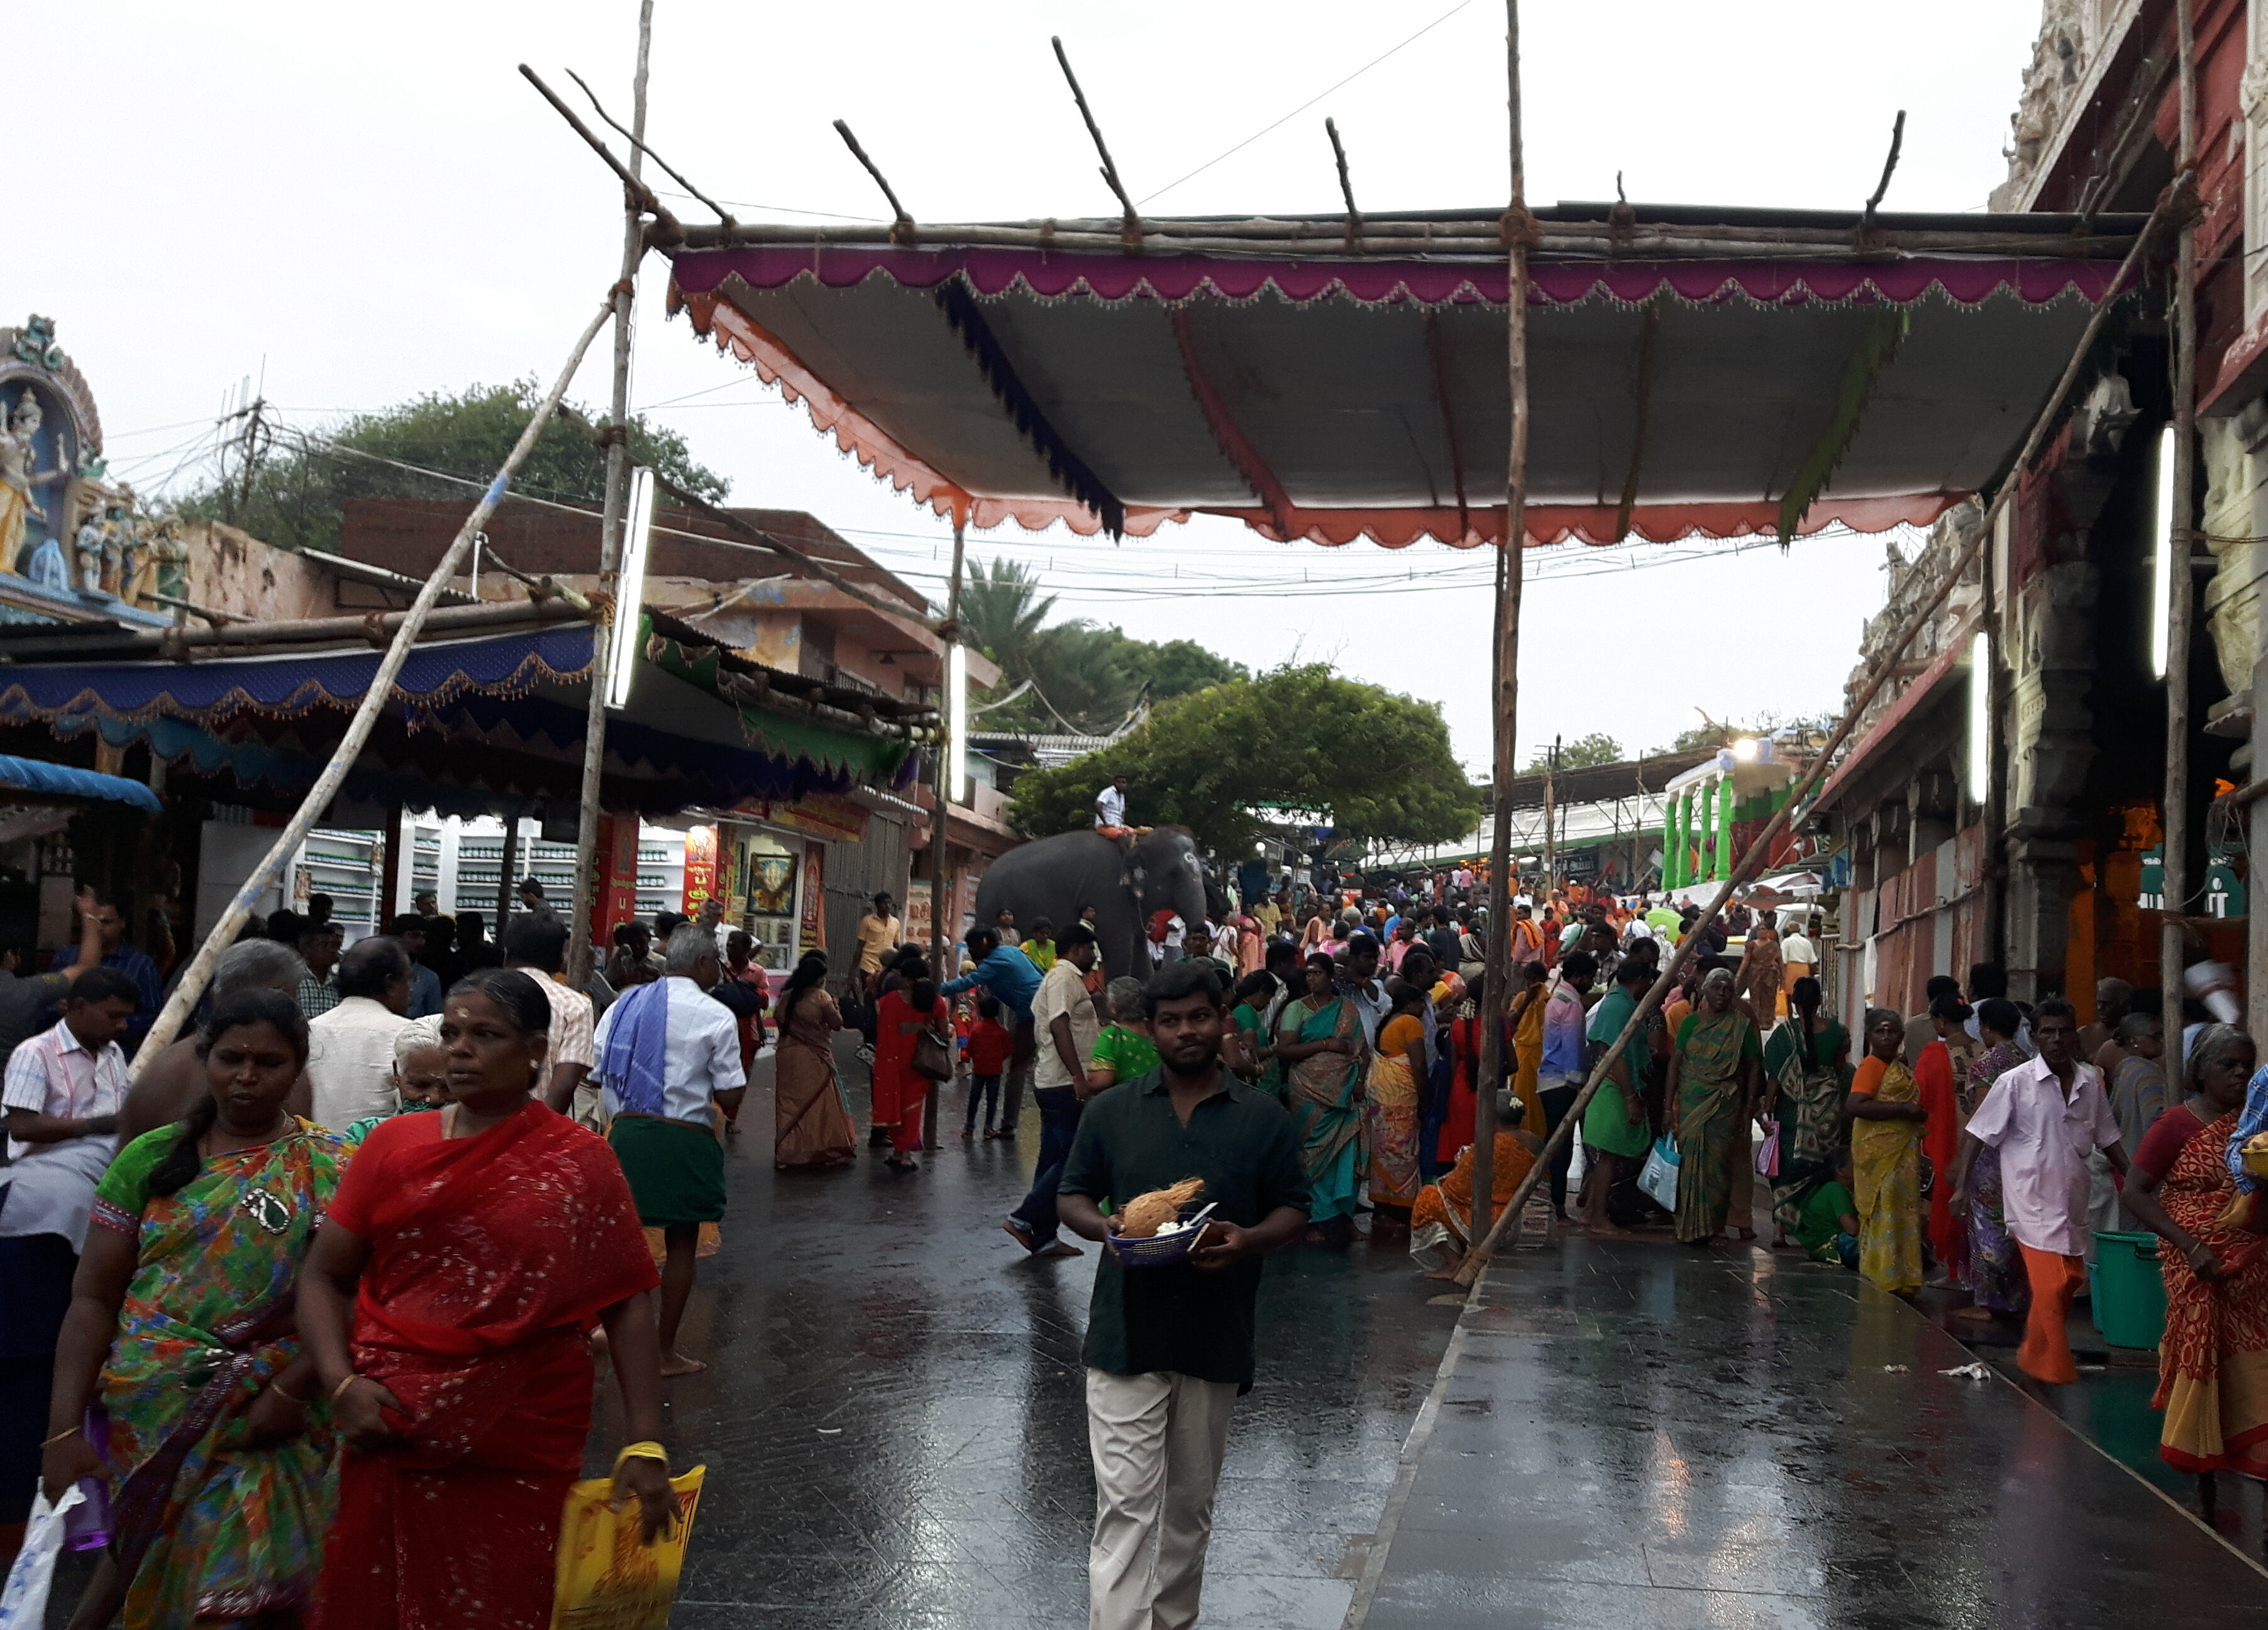 One of the queues at Tiruchendur shore temple, India